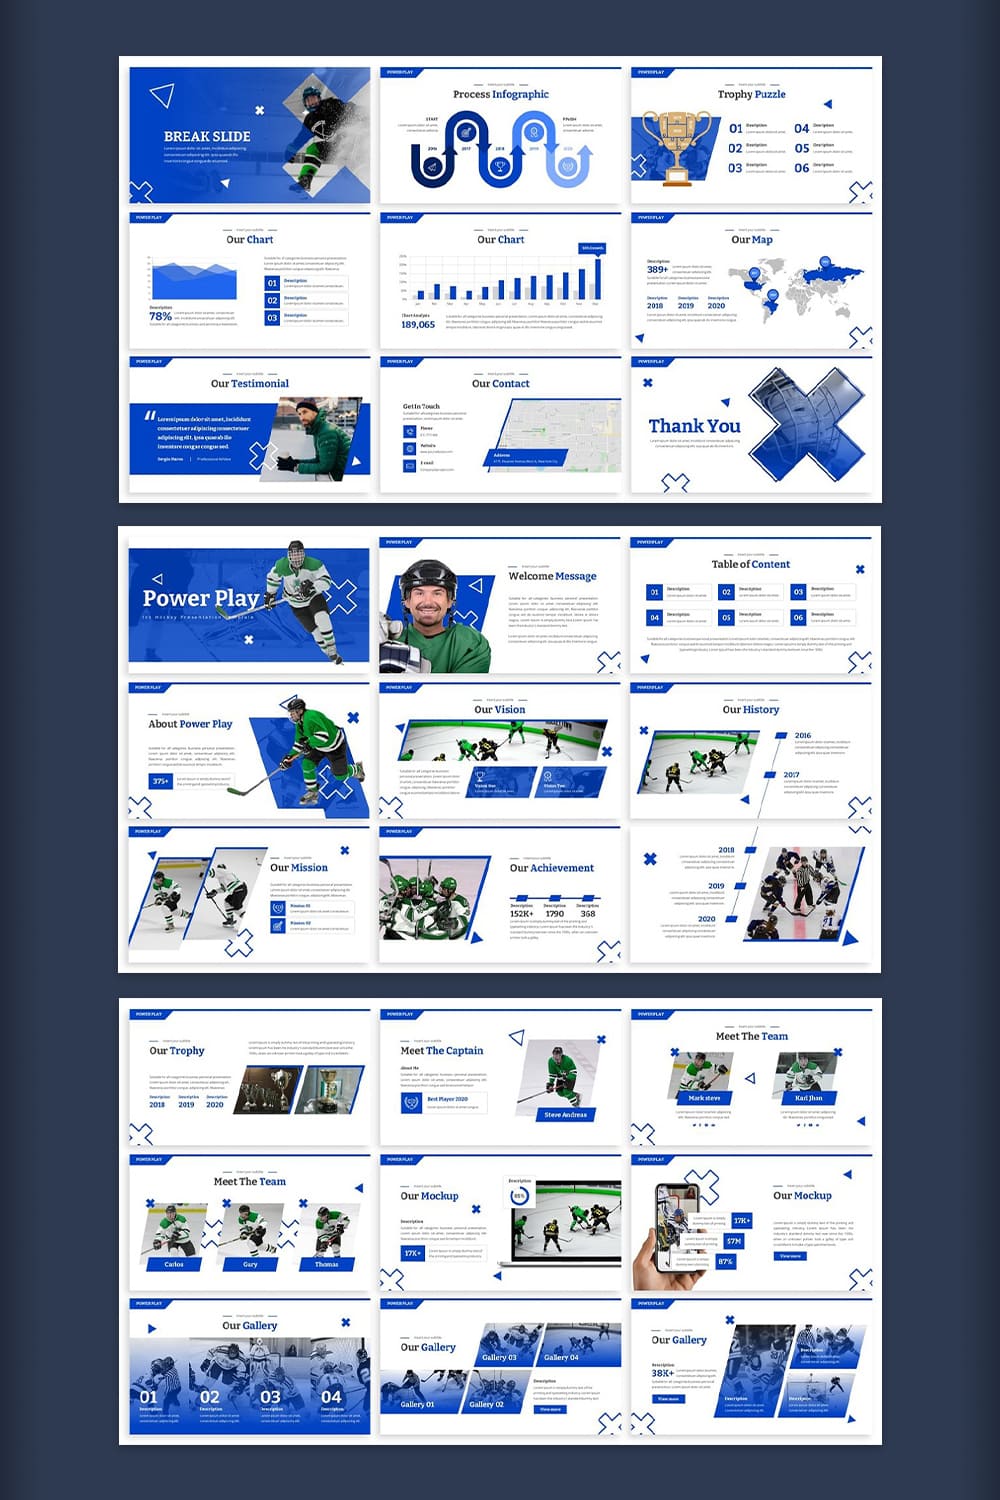 Power Play - Hockey Google Slides Pinterest collage image.